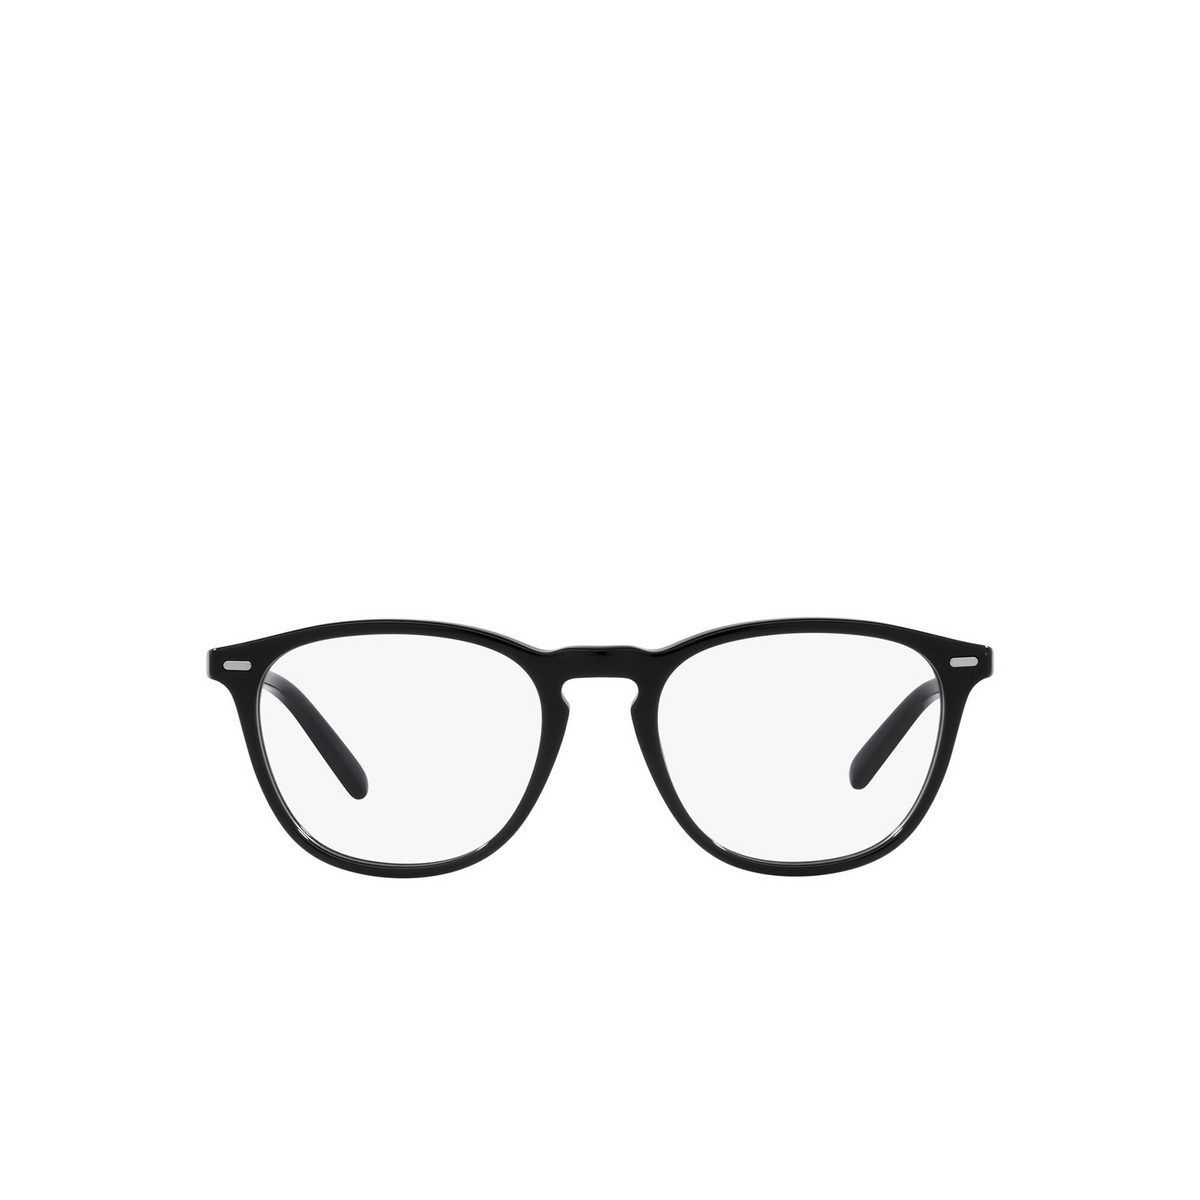 Polo Ralph Lauren® Square Eyeglasses: PH2247 color Shiny Black 5001 - front view.